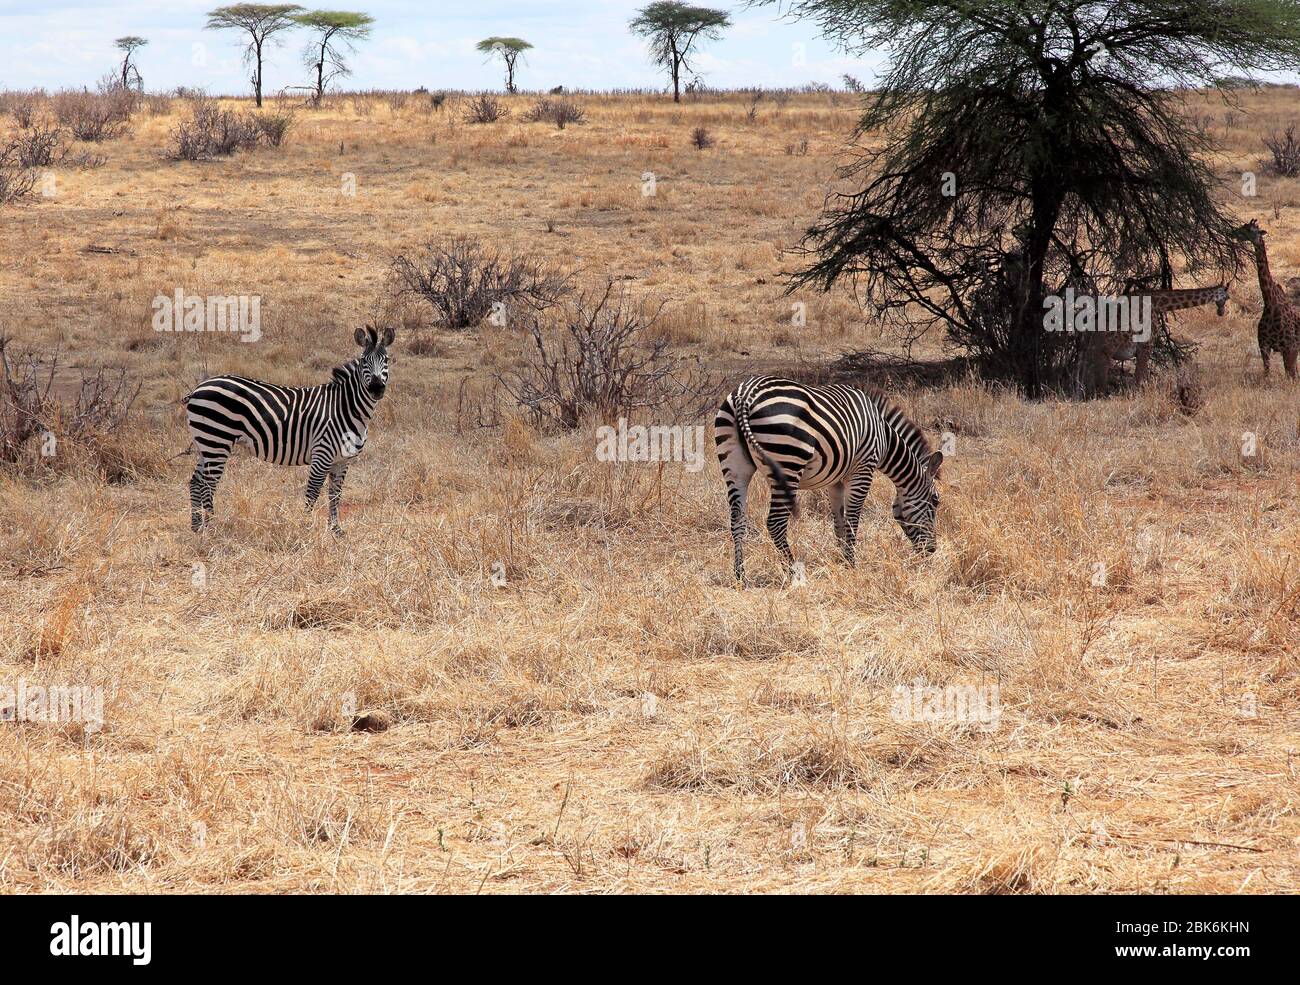 Zebra and giraffe feeding on the savanna in East Africa Stock Photo